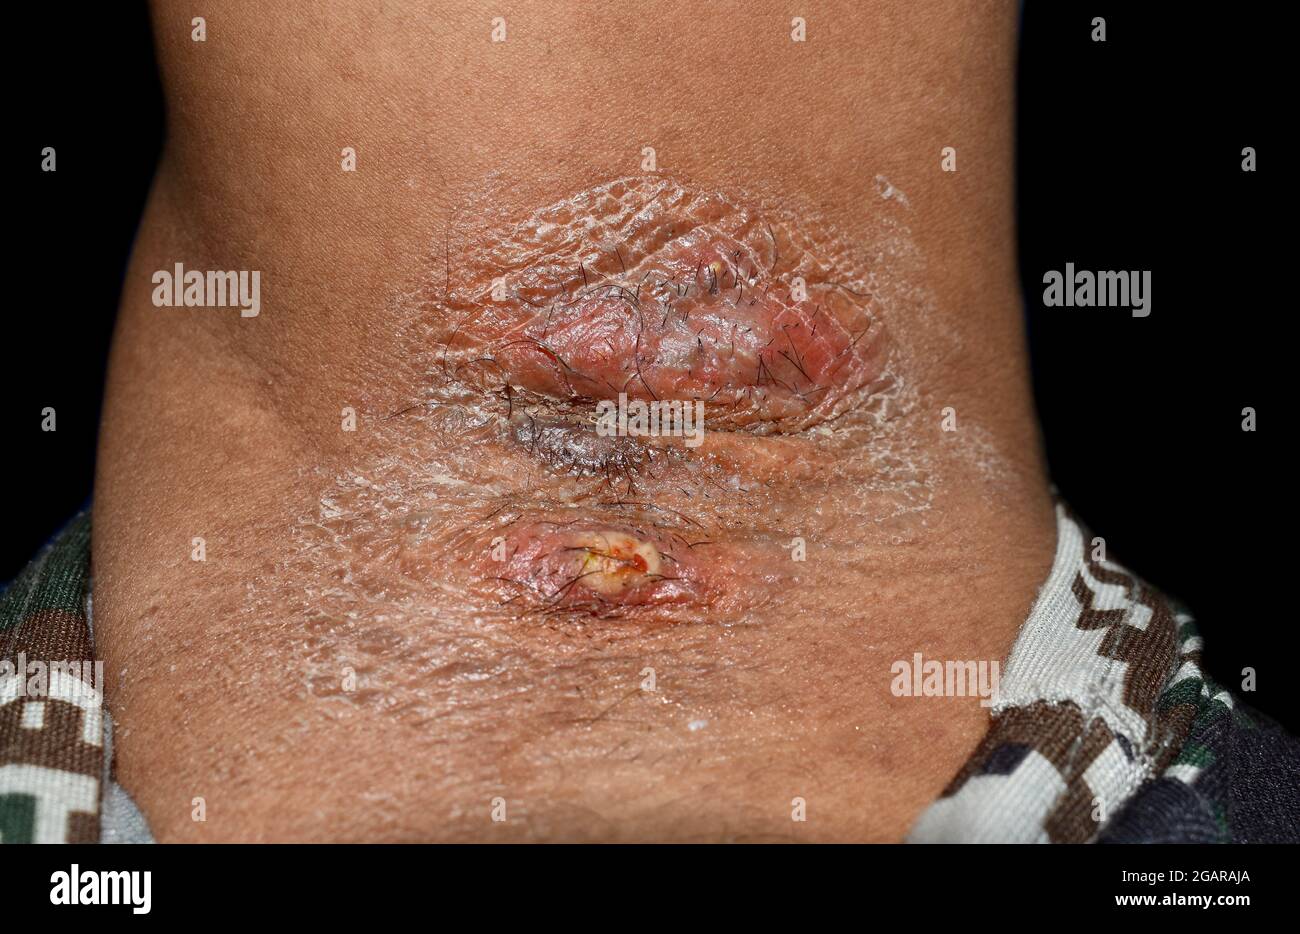 Carbuncle y foliculitis con celulitis circundante o infección cutánea por estafilococos/estreptococos en axila de paciente asiático birmano. Aislado o Foto de stock